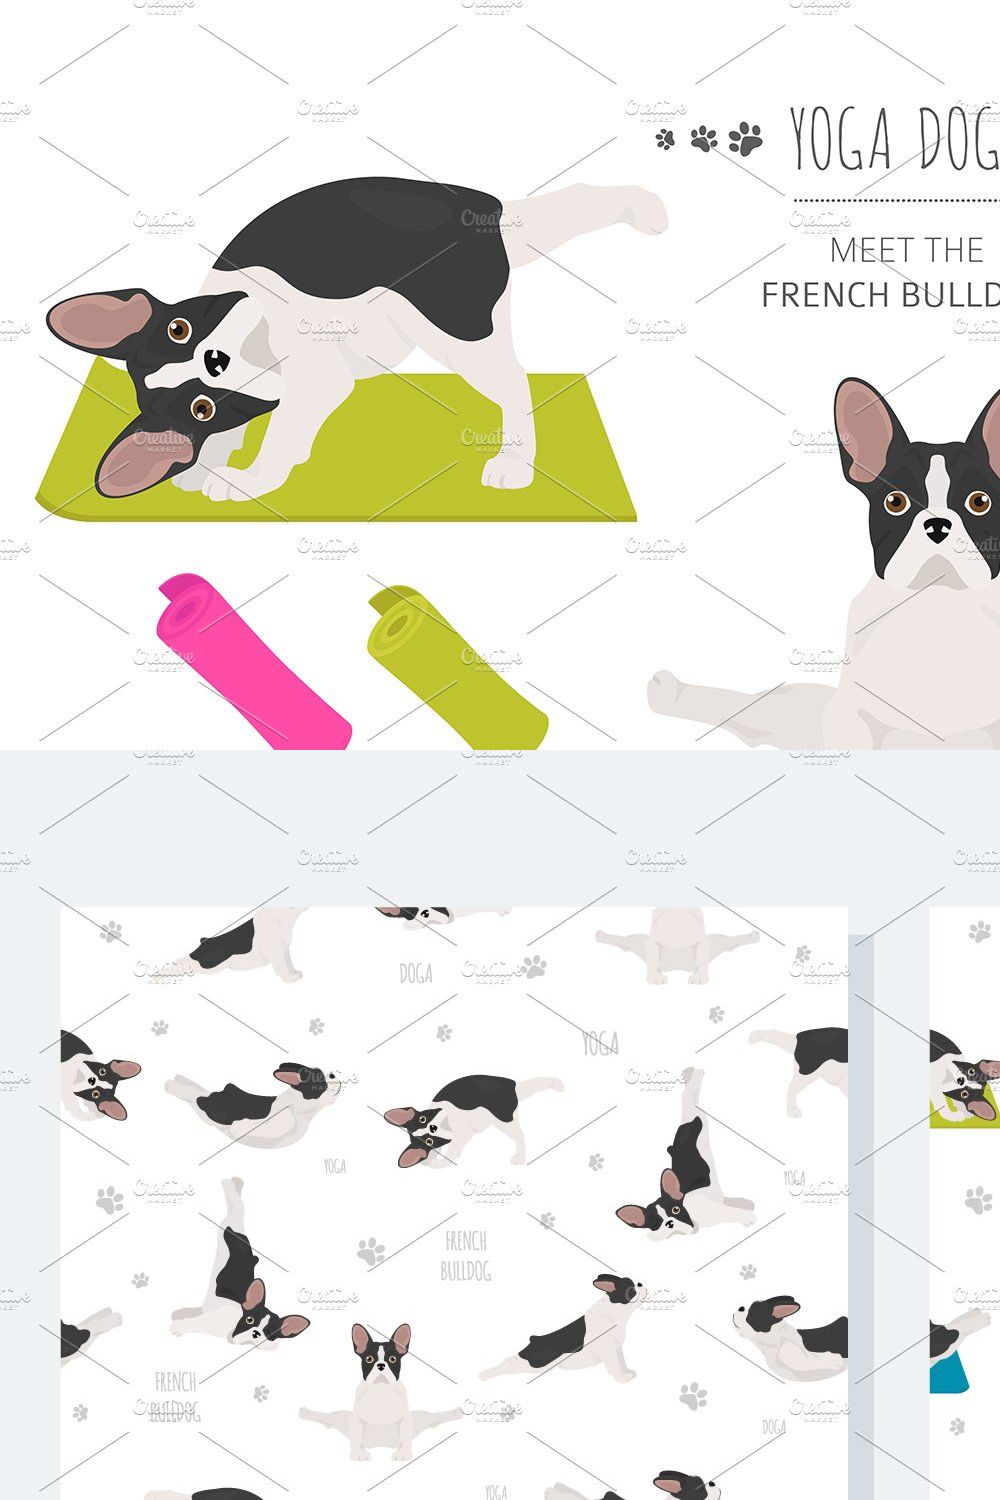 French bulldog yoga pinterest preview image.